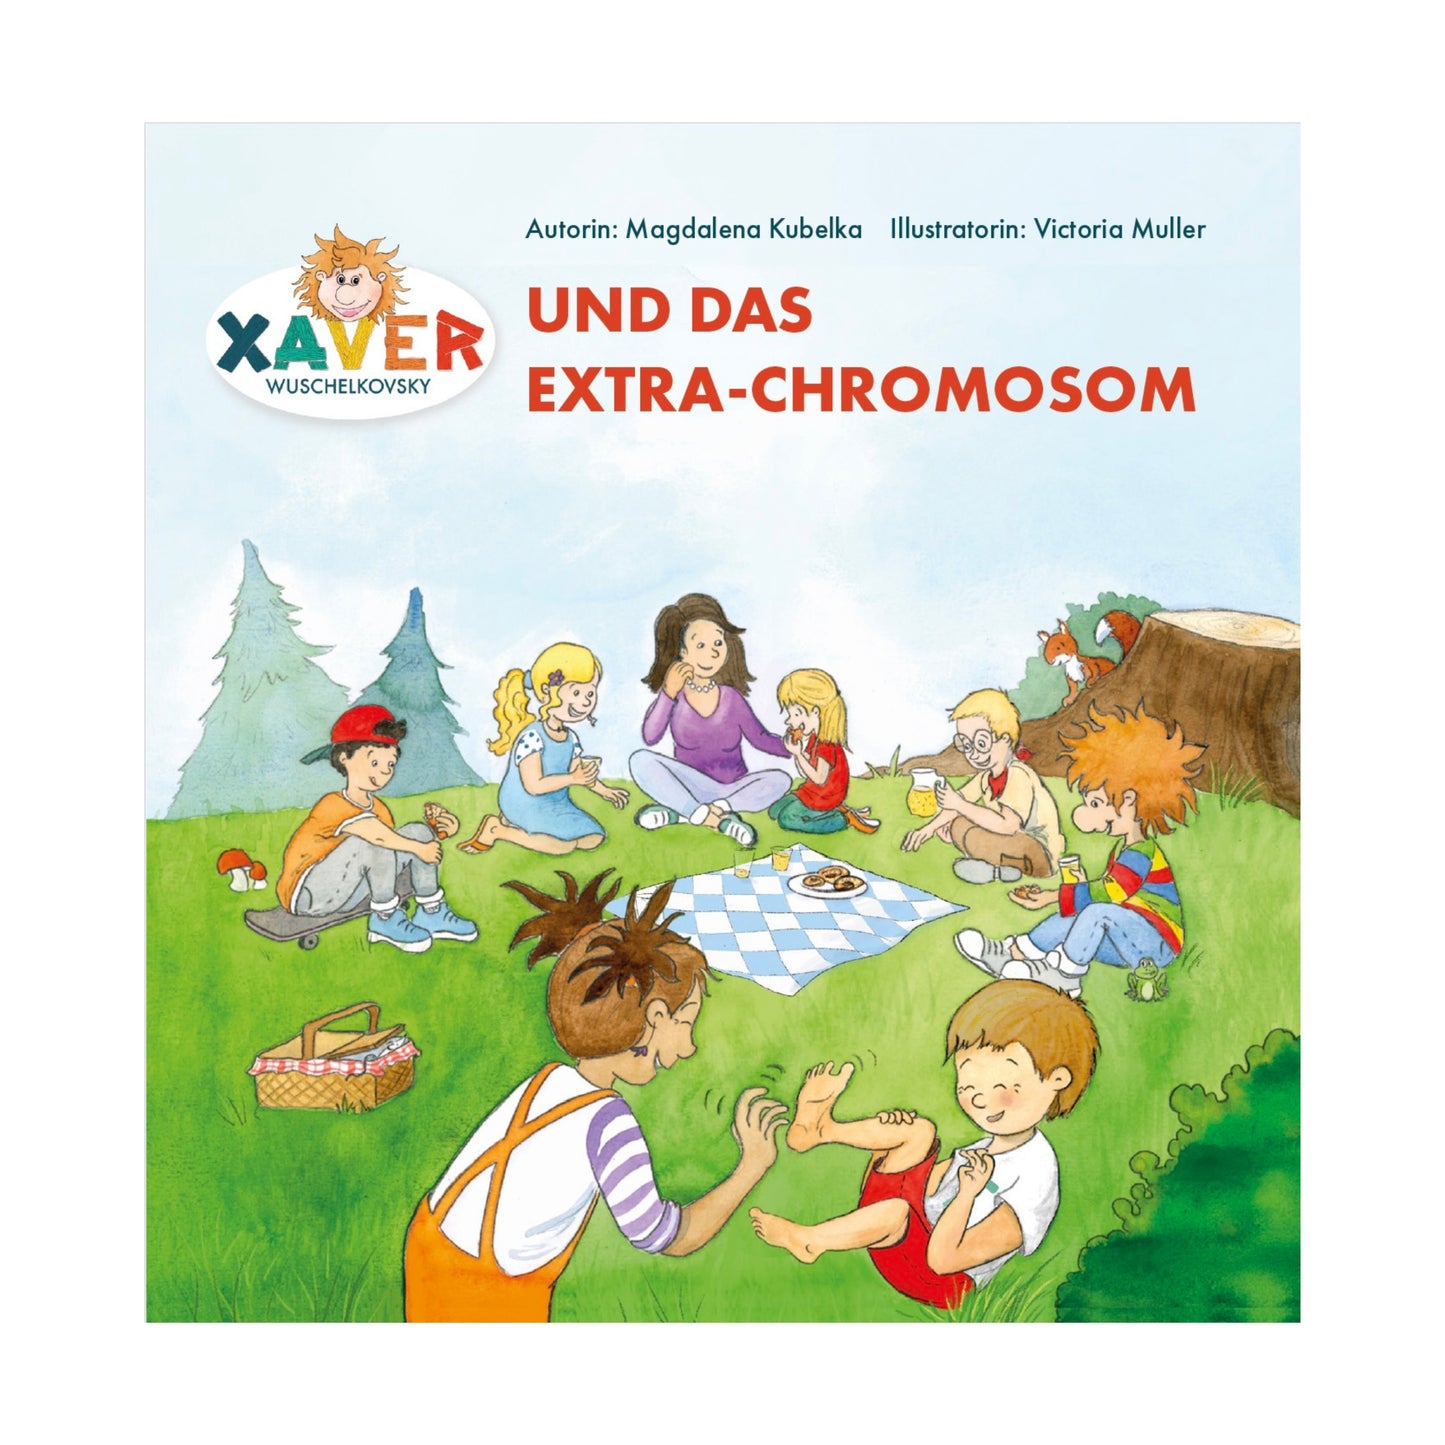 Xaver: Kinderbuch "Xaver Wuschelkovsky und das Extra-Chromosom"